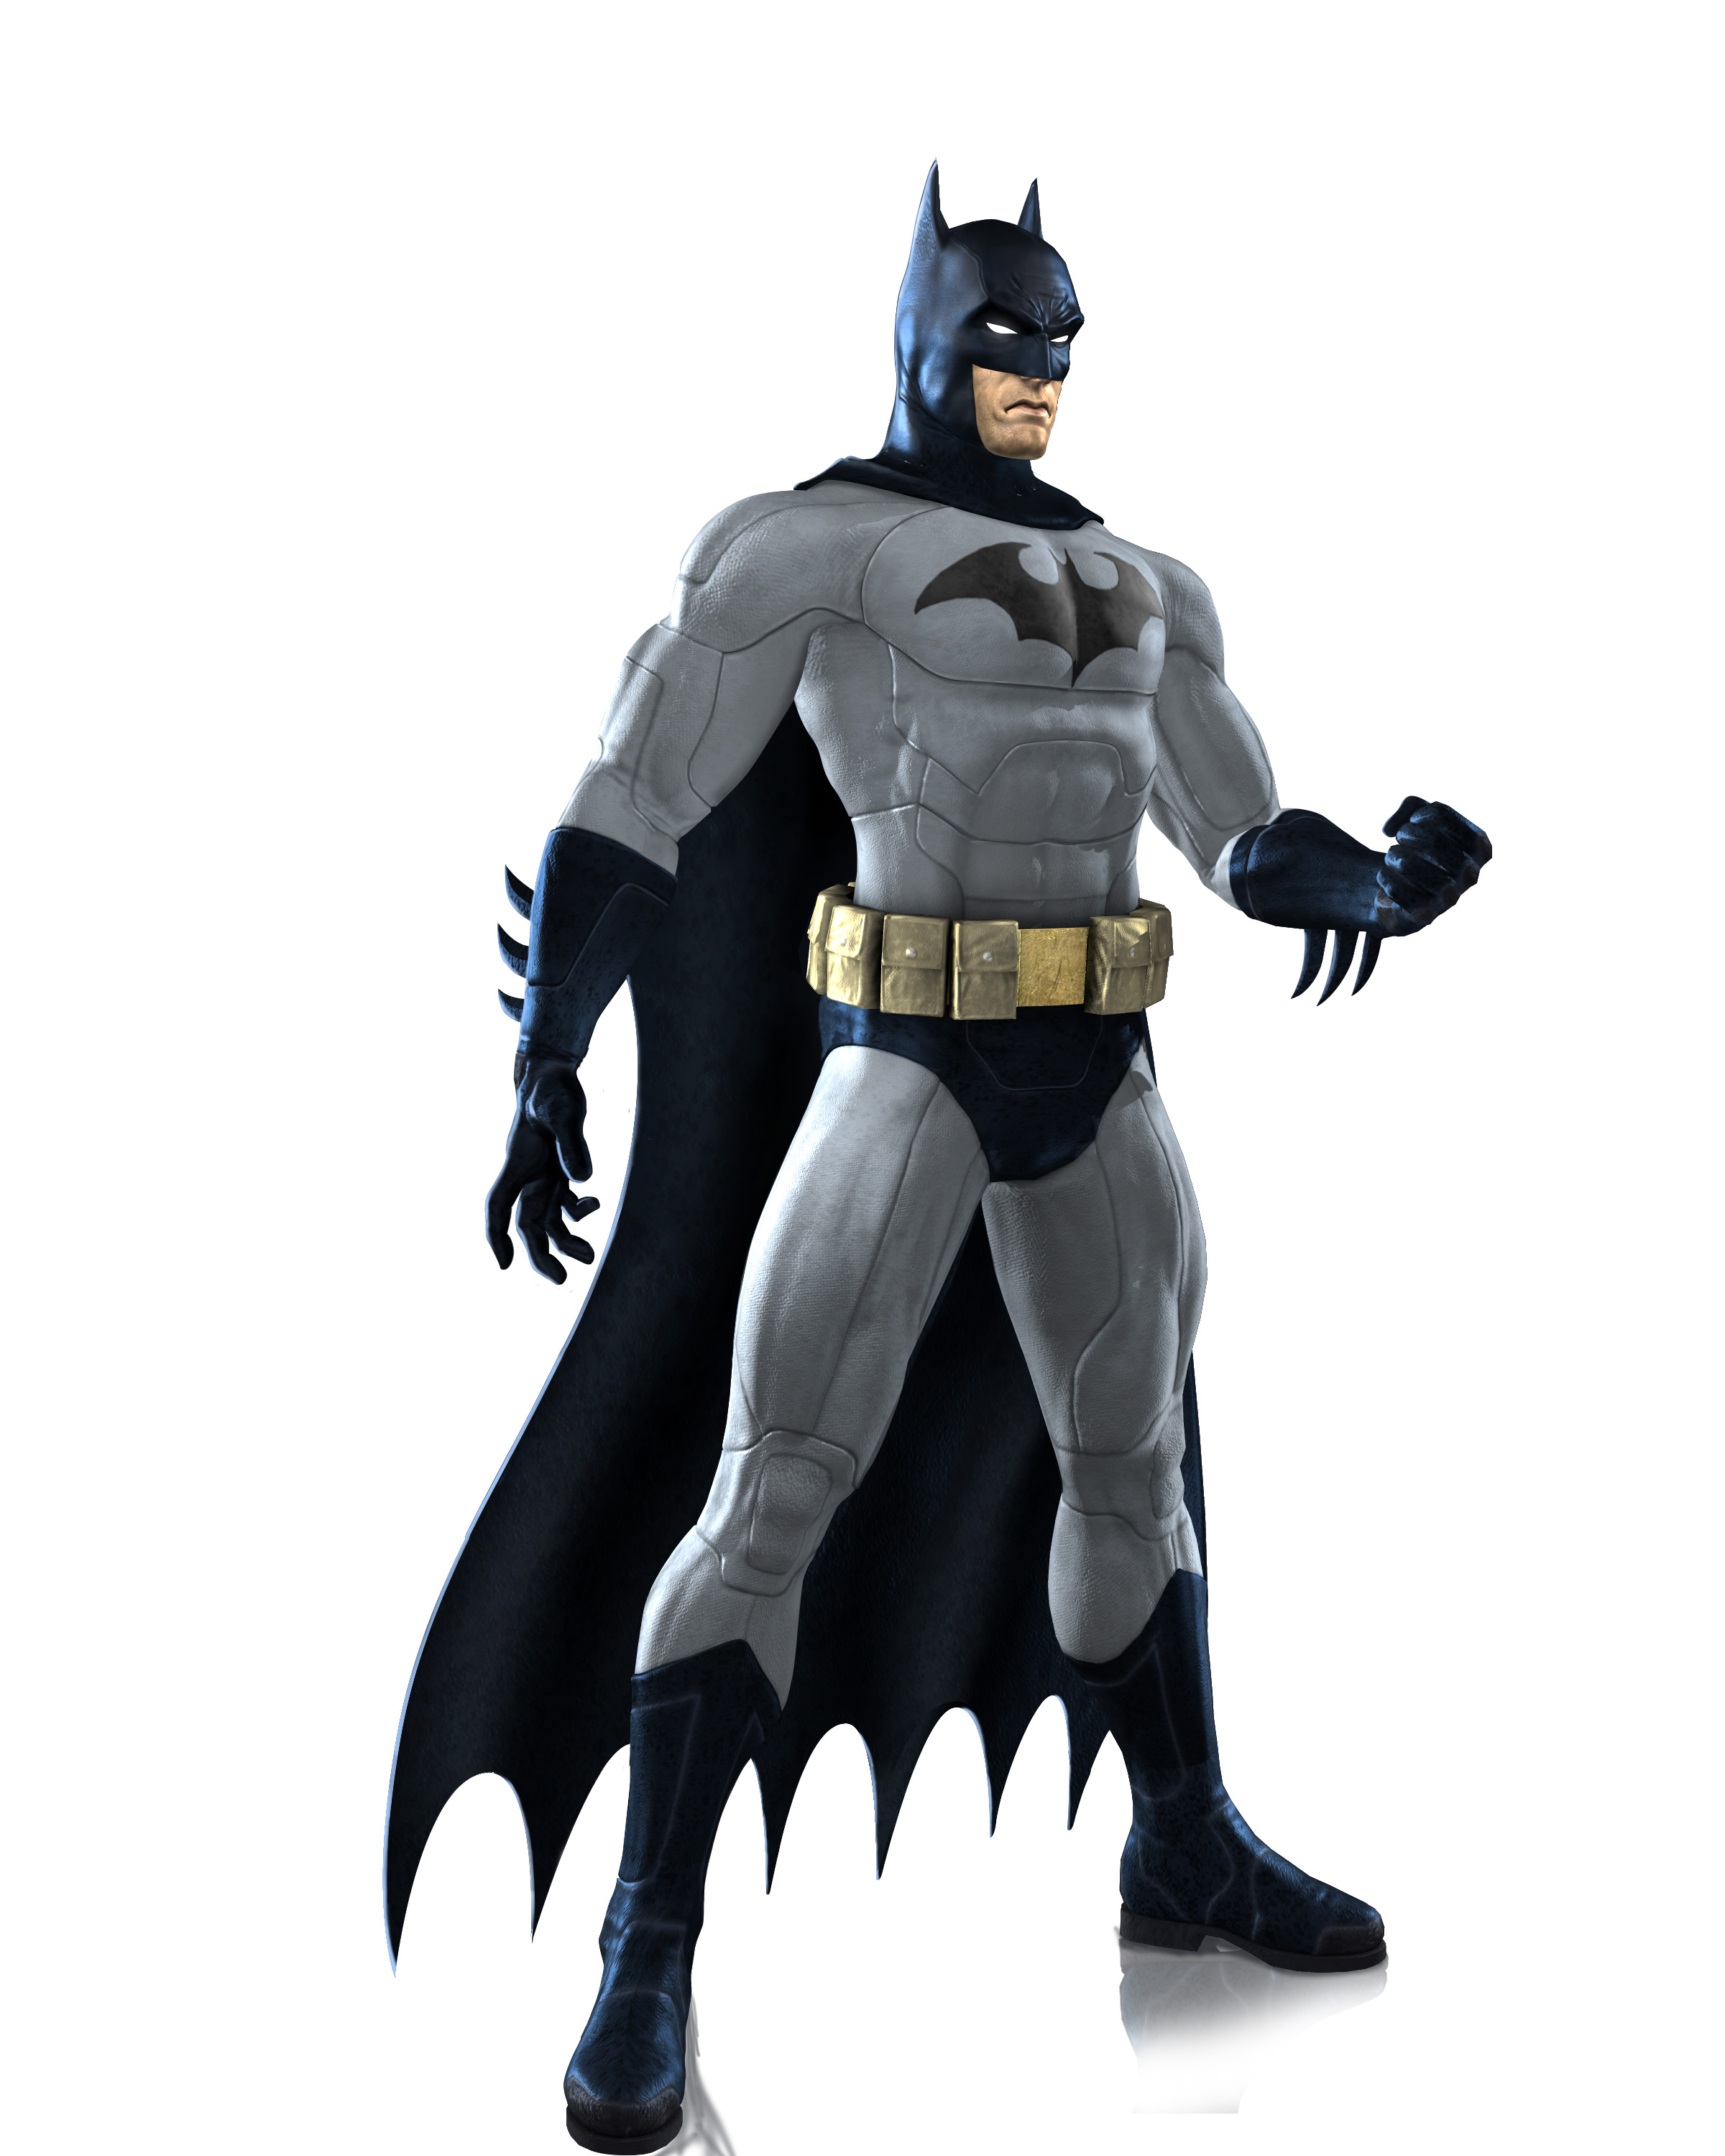 New Batman Render from MK vs DC Universe